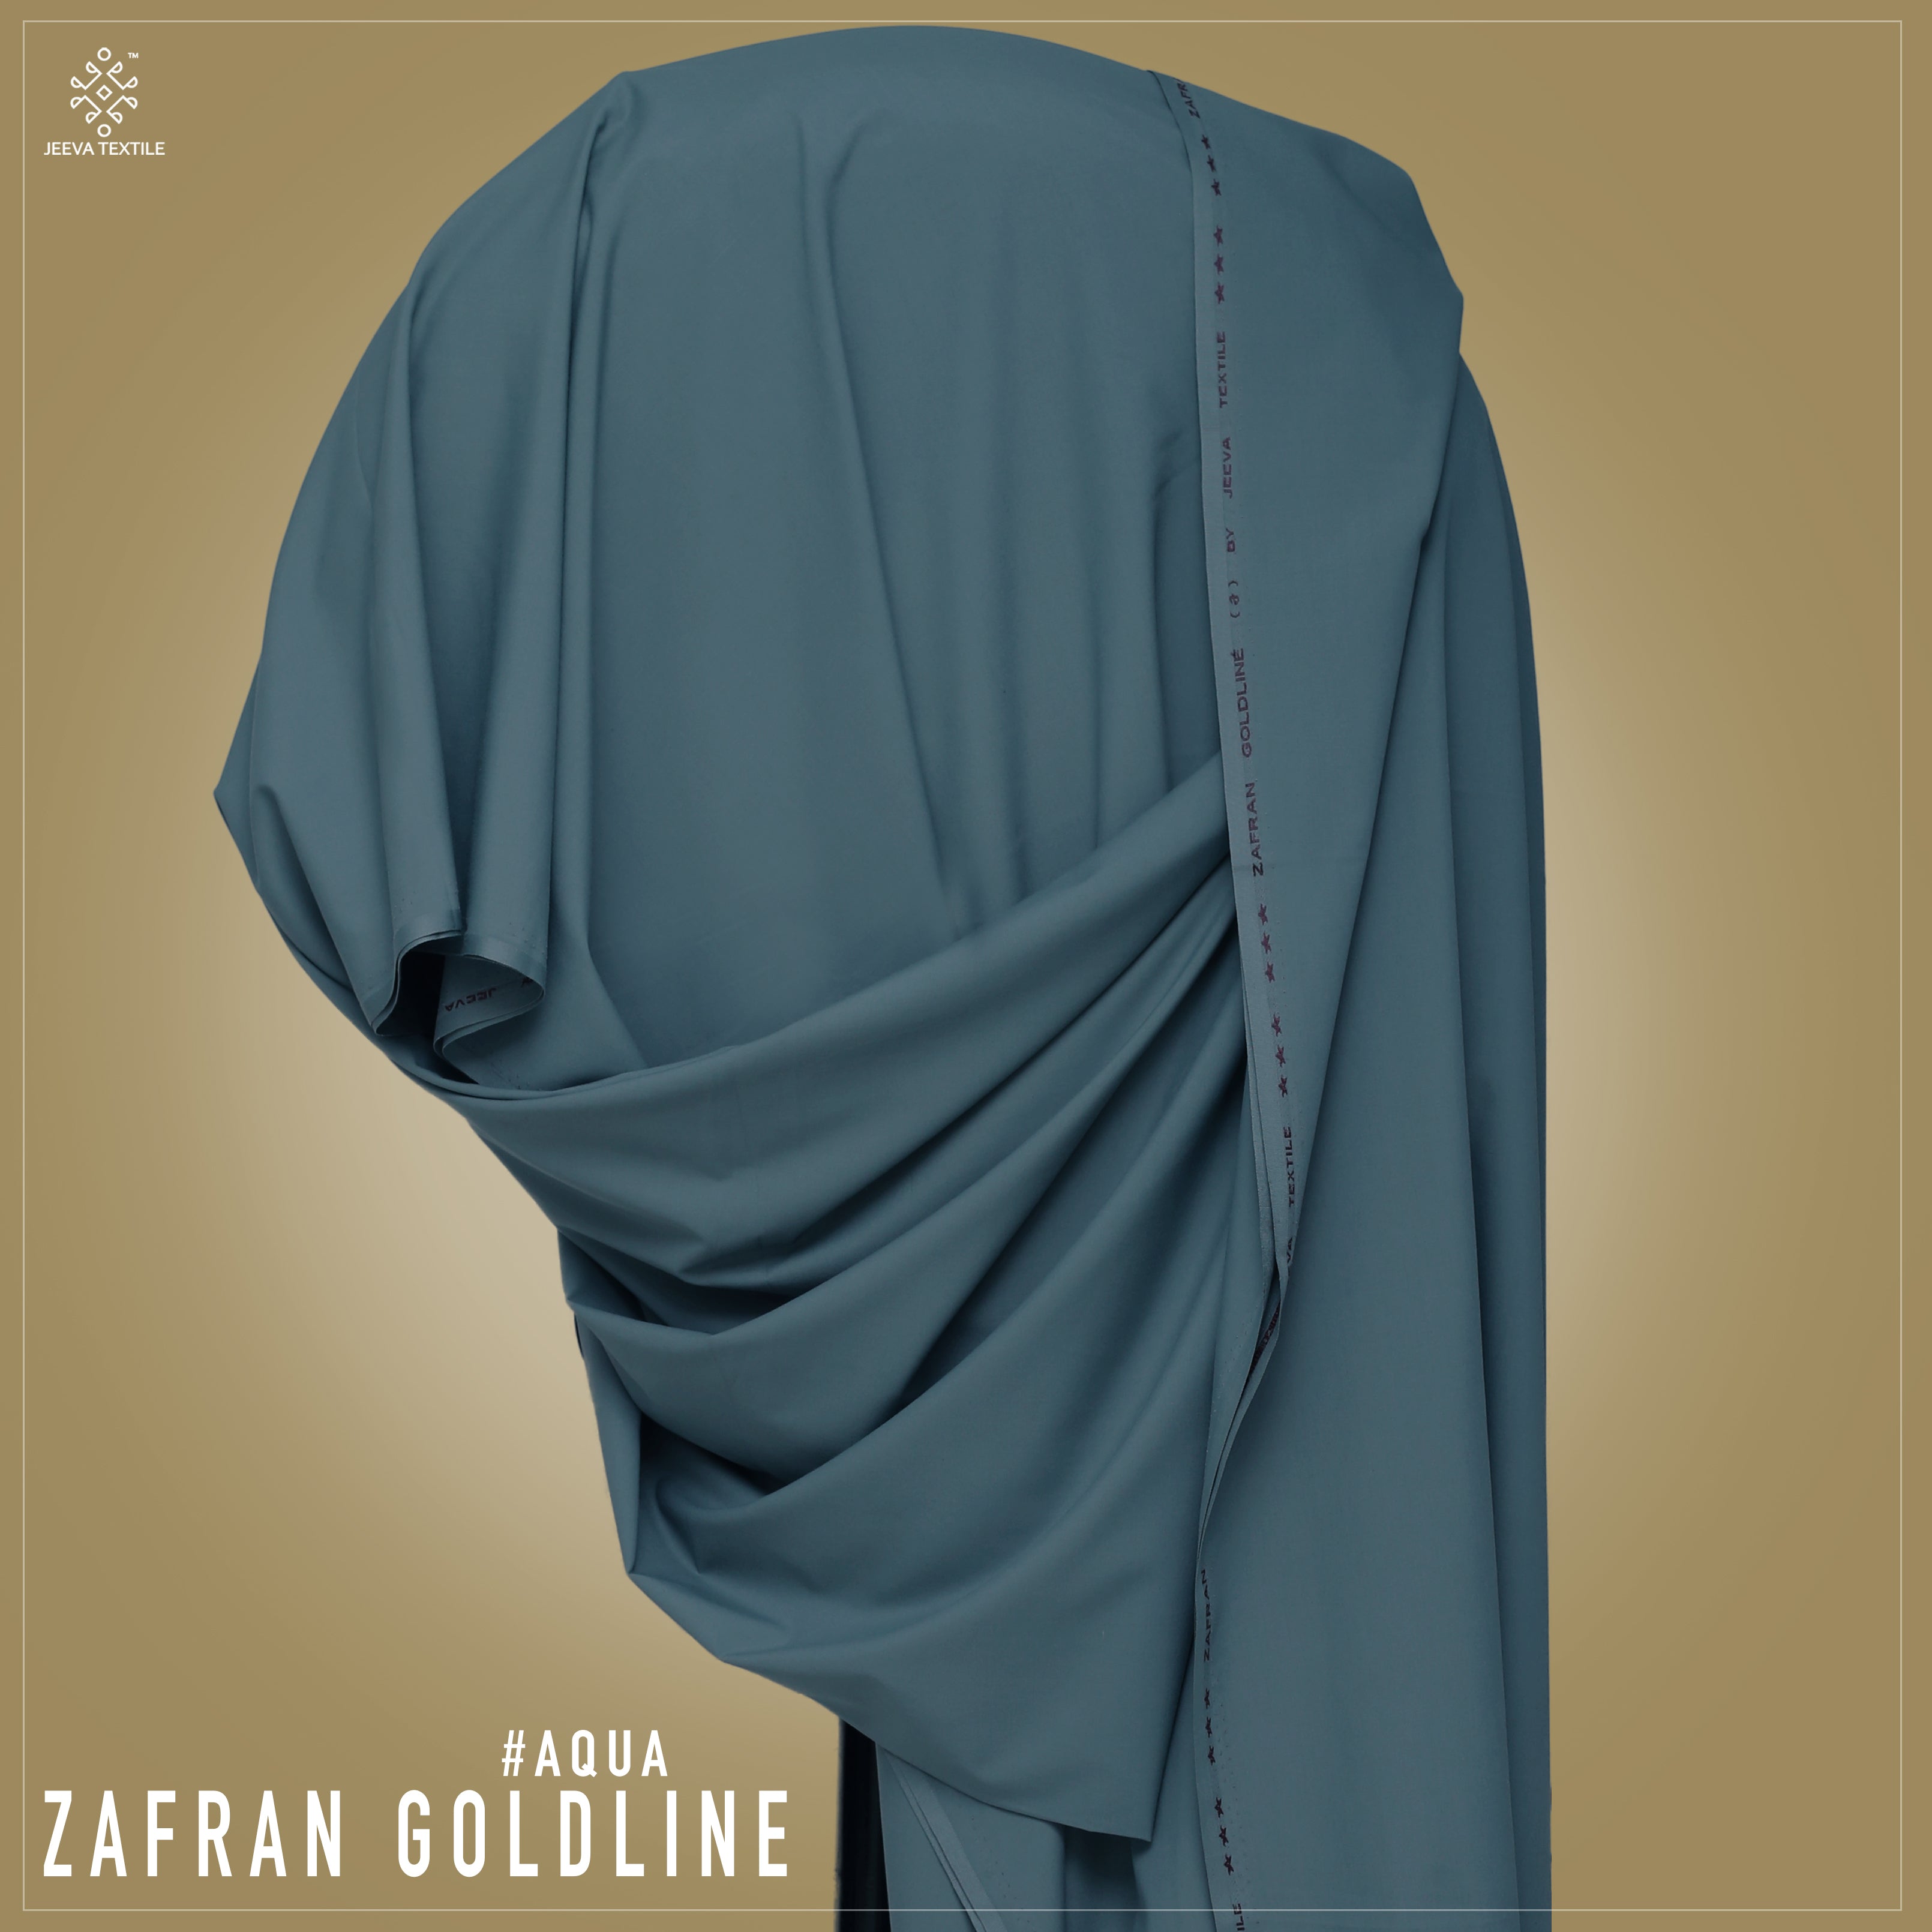 Zafraan Goldline